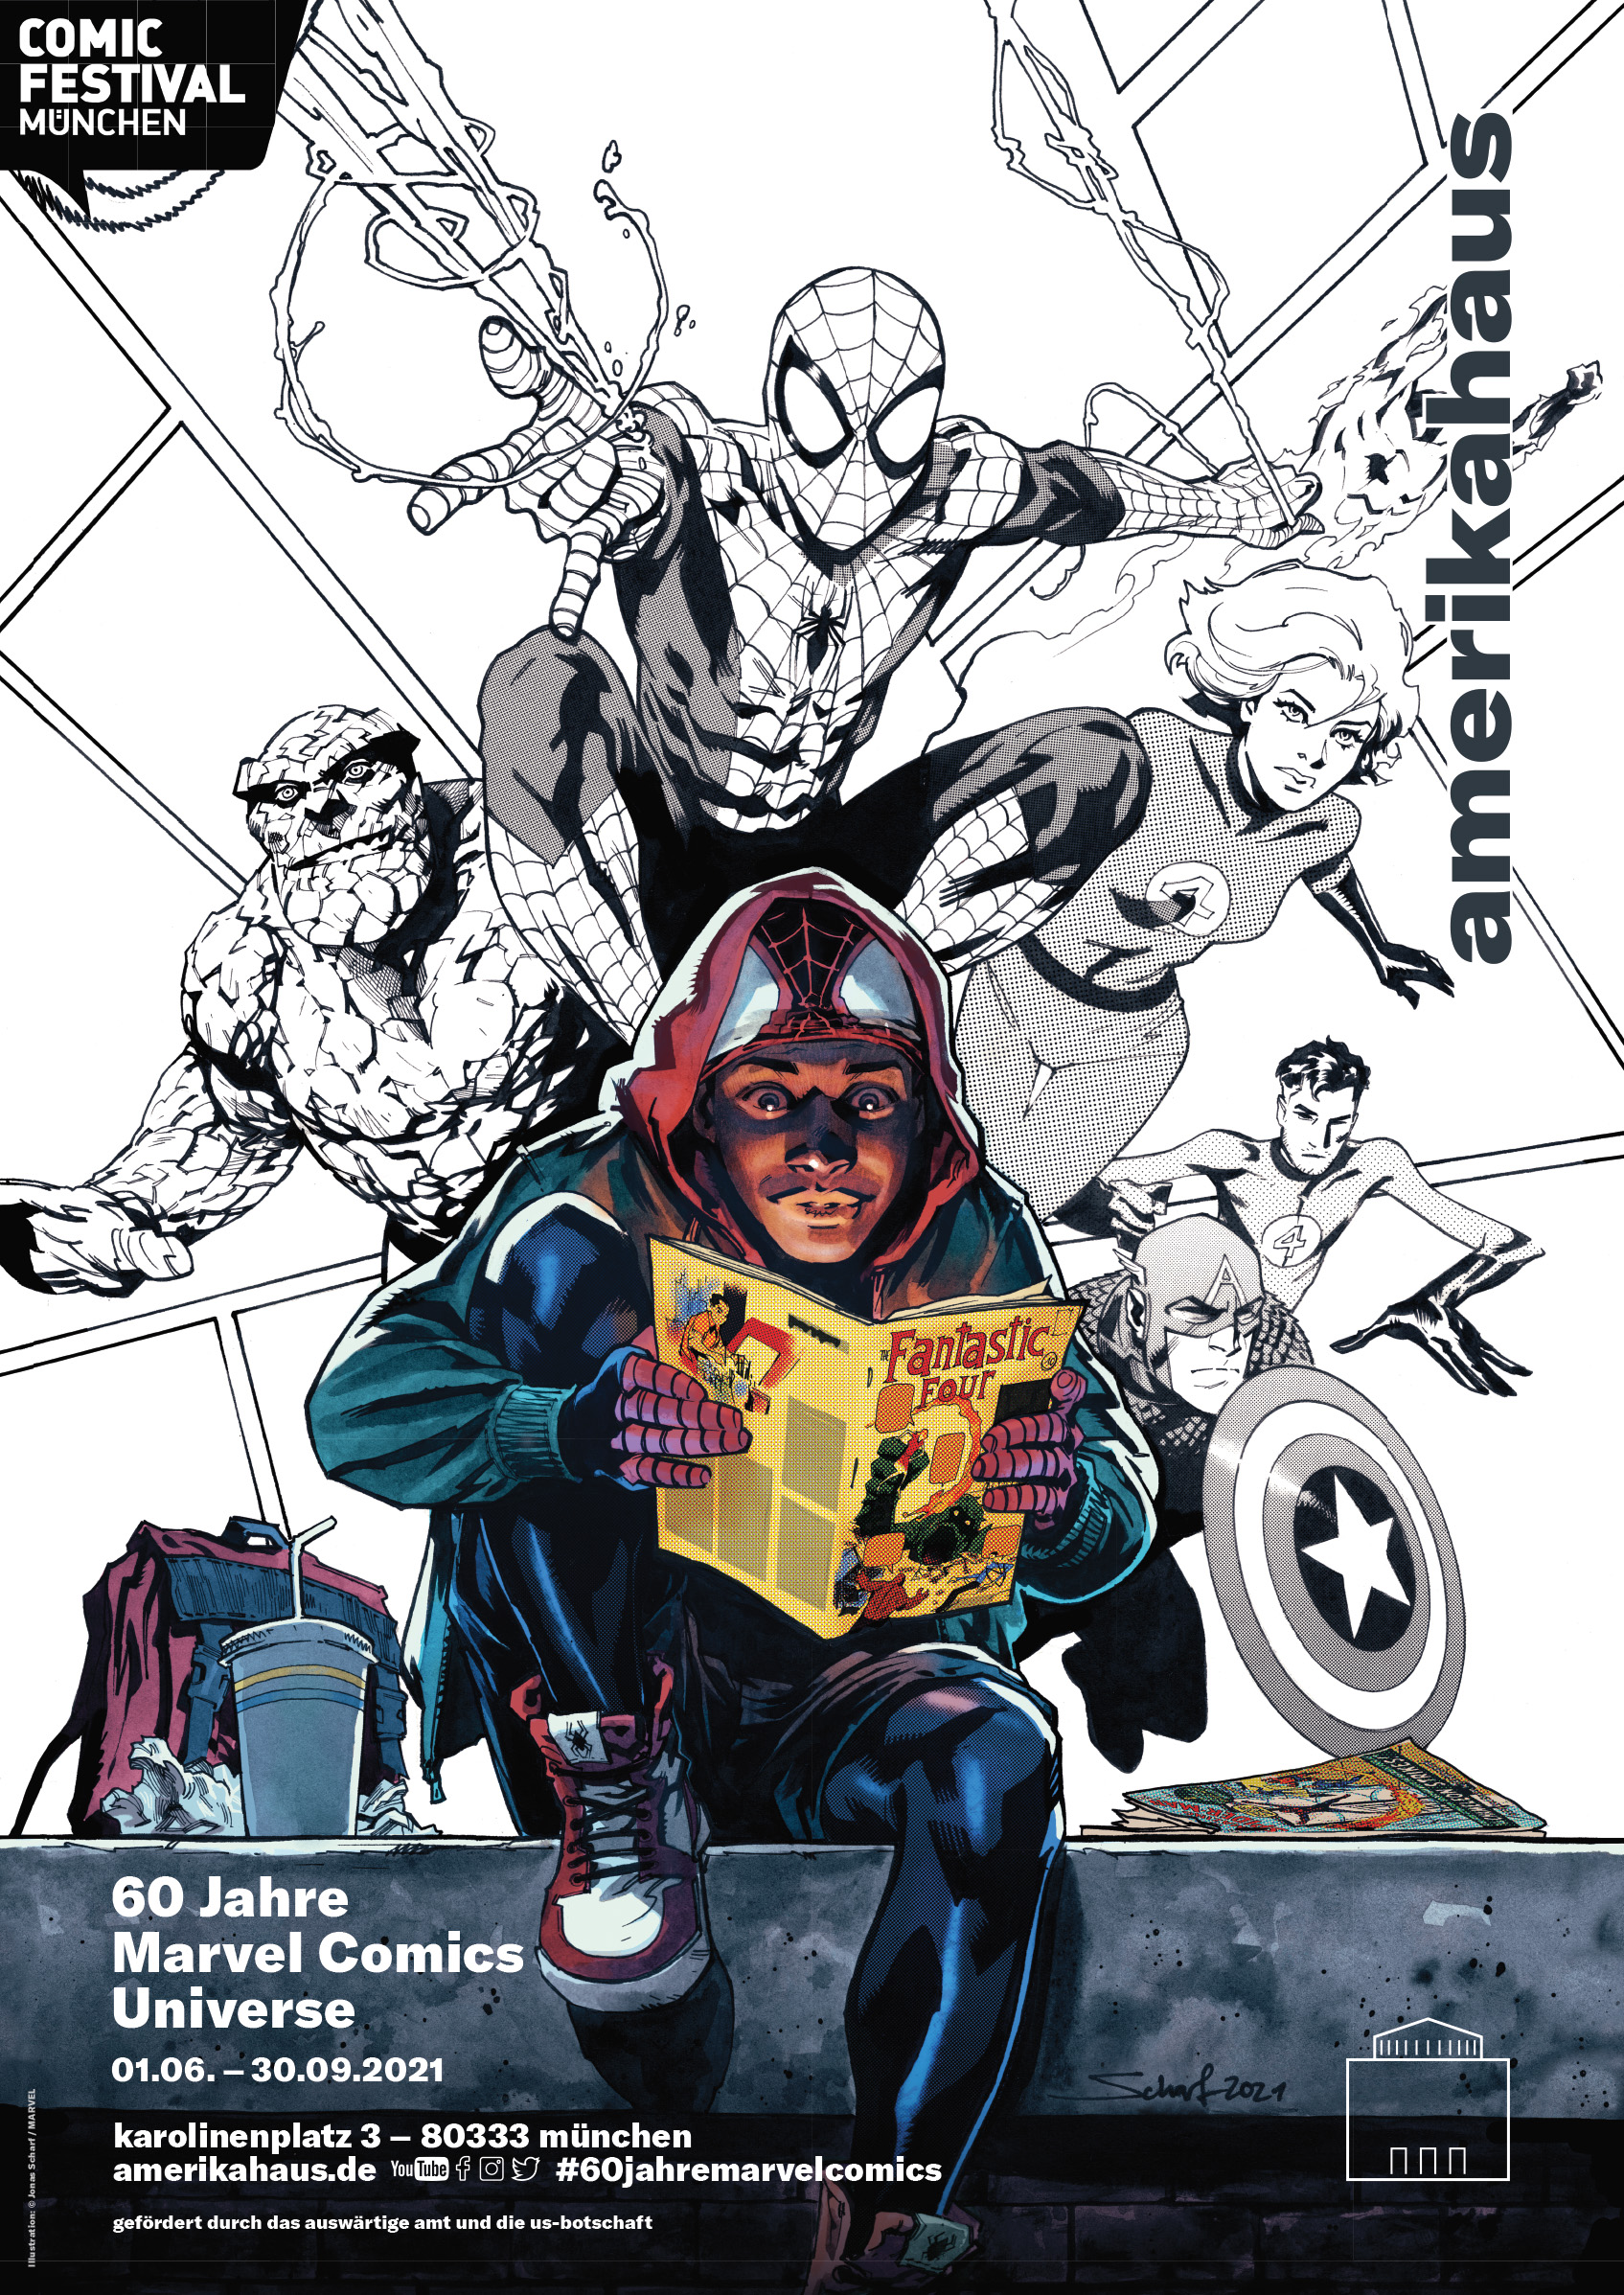 Ausstellungskatalog "60 Jahre Marvel Comics Universe" (4,58MB)